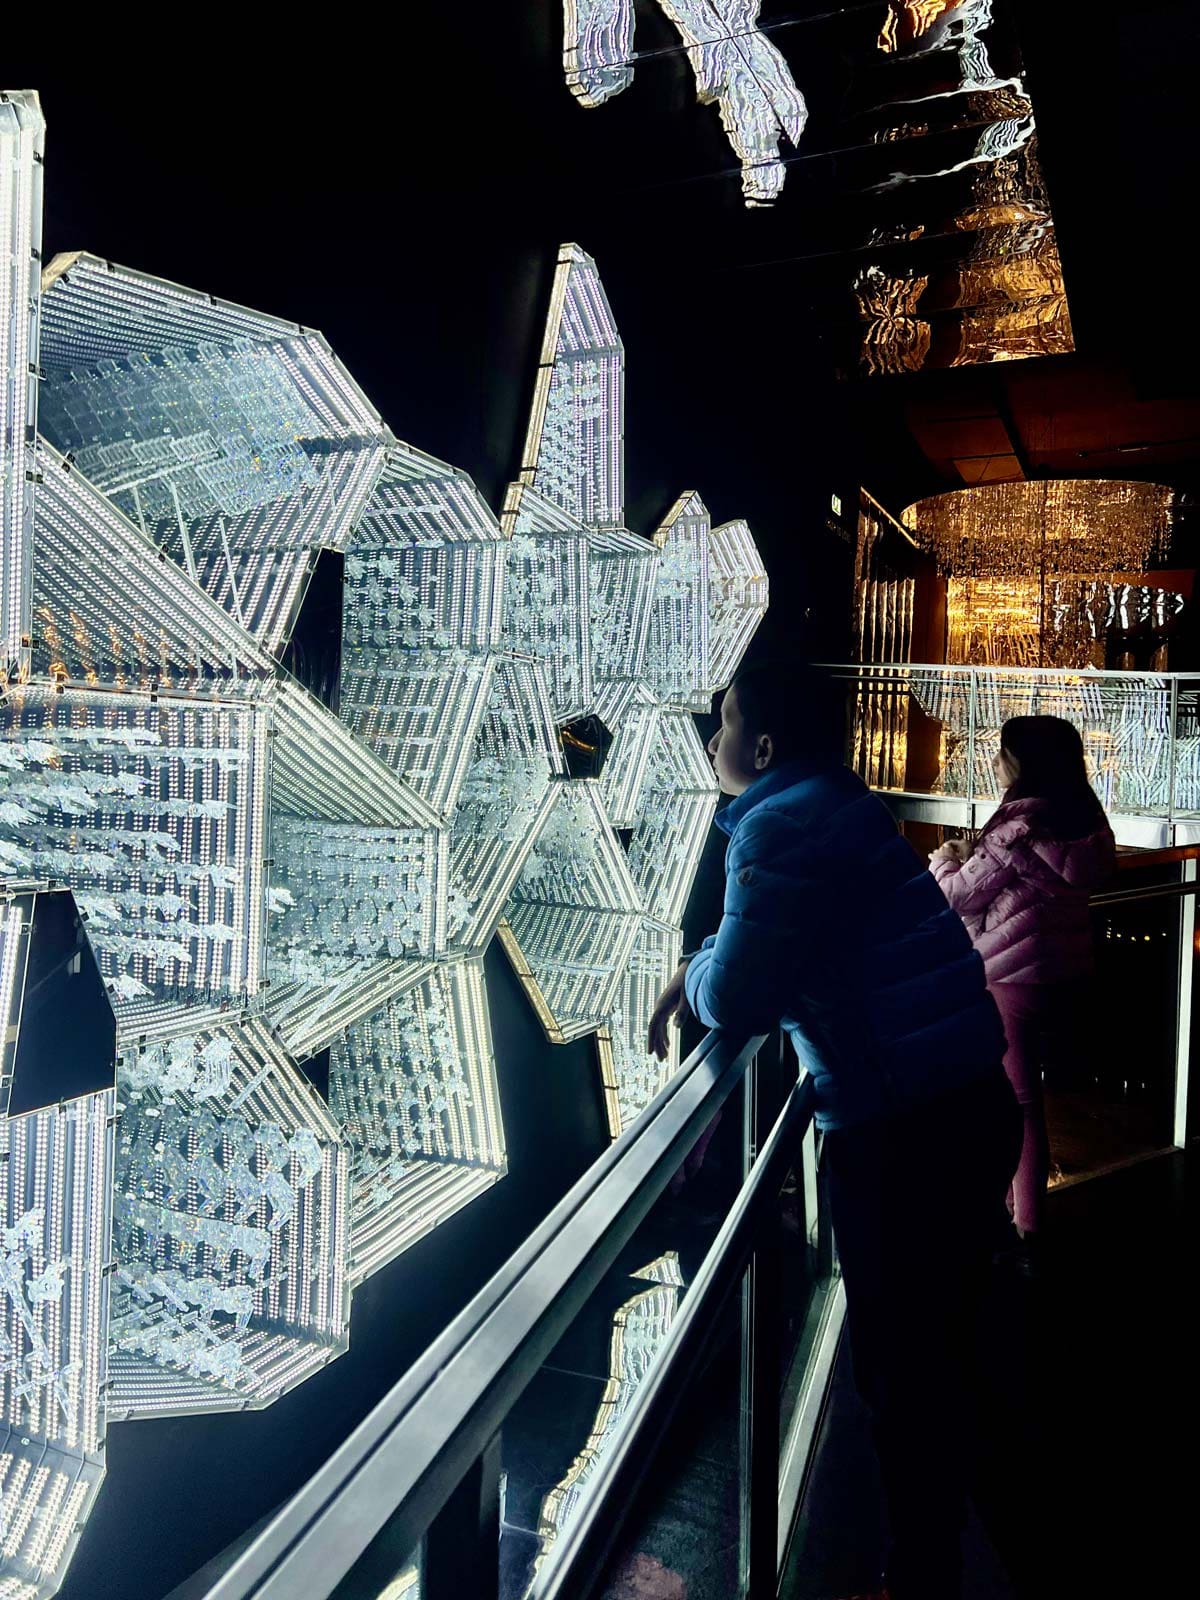 Two kids look at a crystal exhibit at Swarovski Kristallwelten.